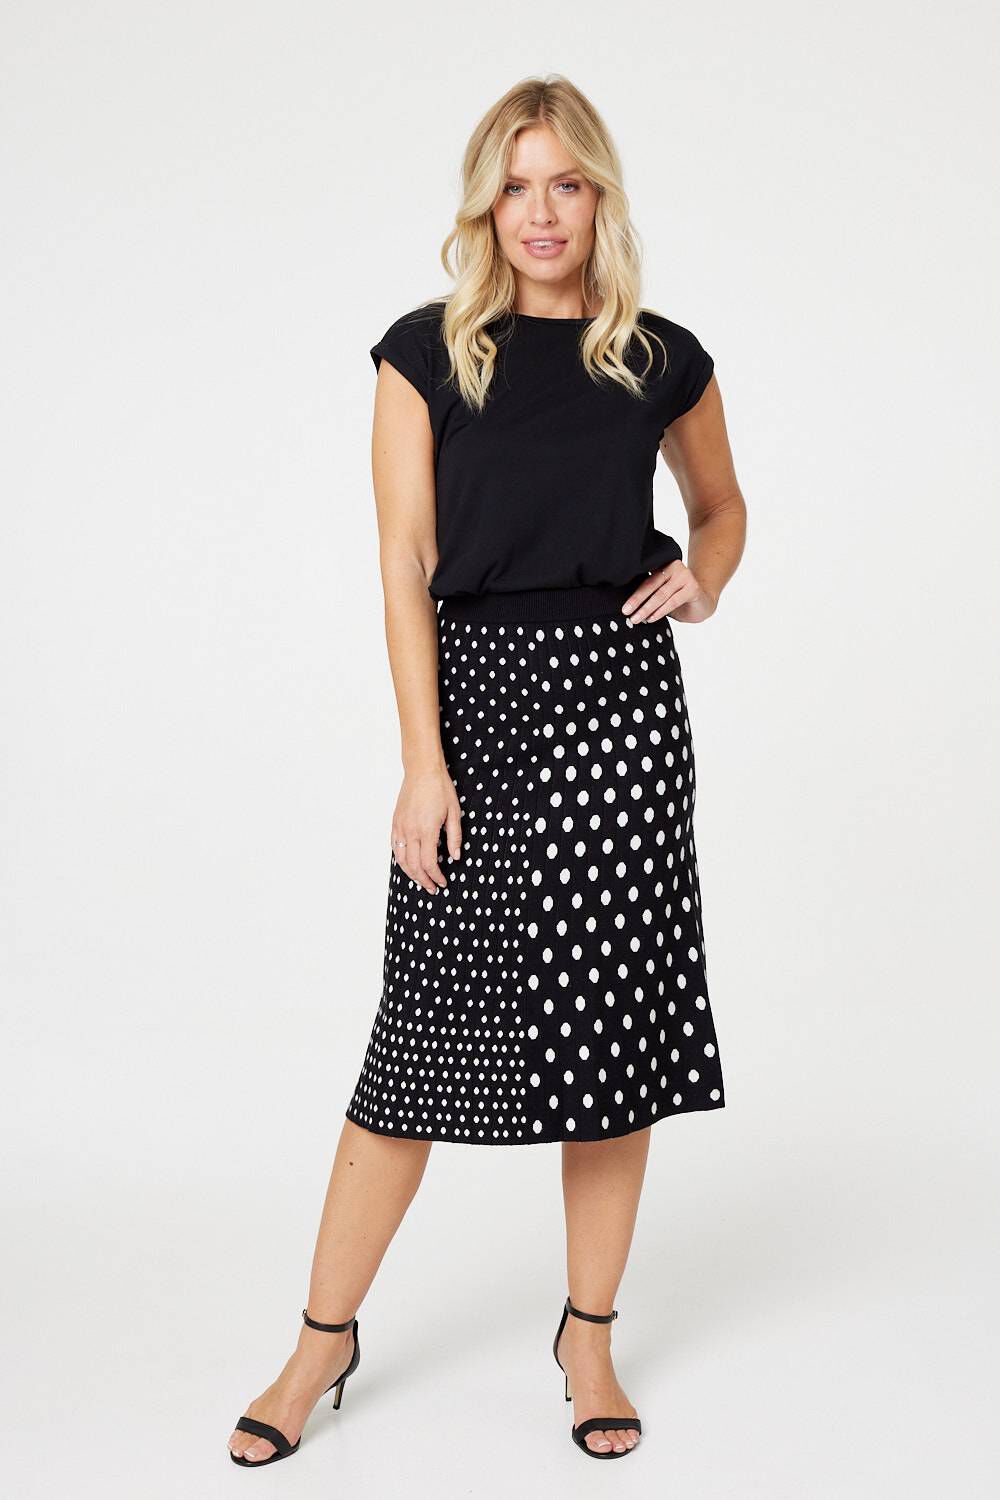 Izabel London Women’s Black and White Viscose Polka Dot A-Line Knitted Skirt, Size: 12